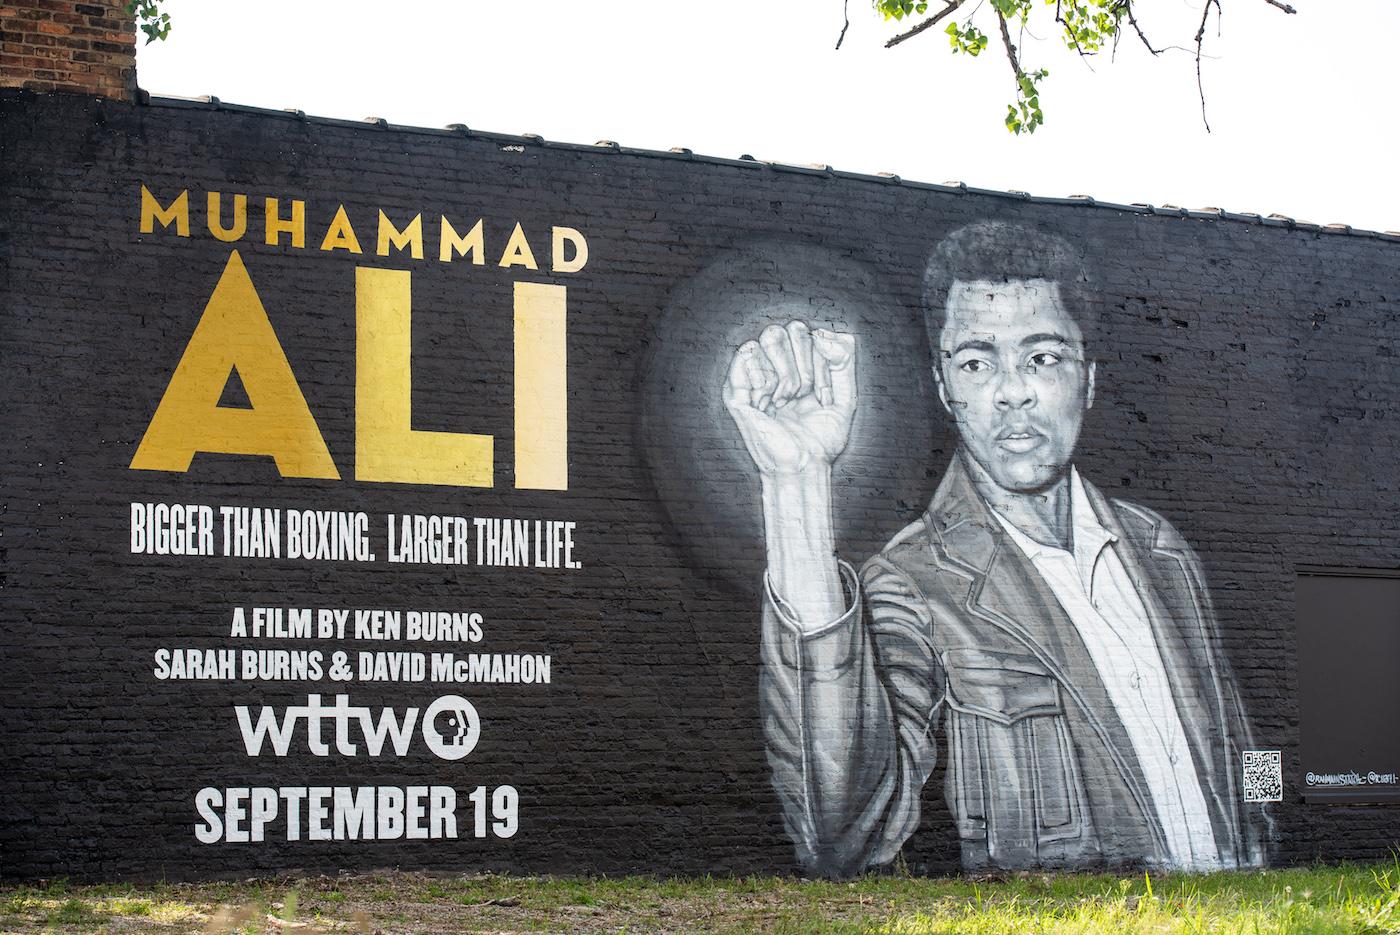 Rahmaan Statik's Muhammad Ali mural in Chicago's Little Village. Photo: WTTW/Liz Markel